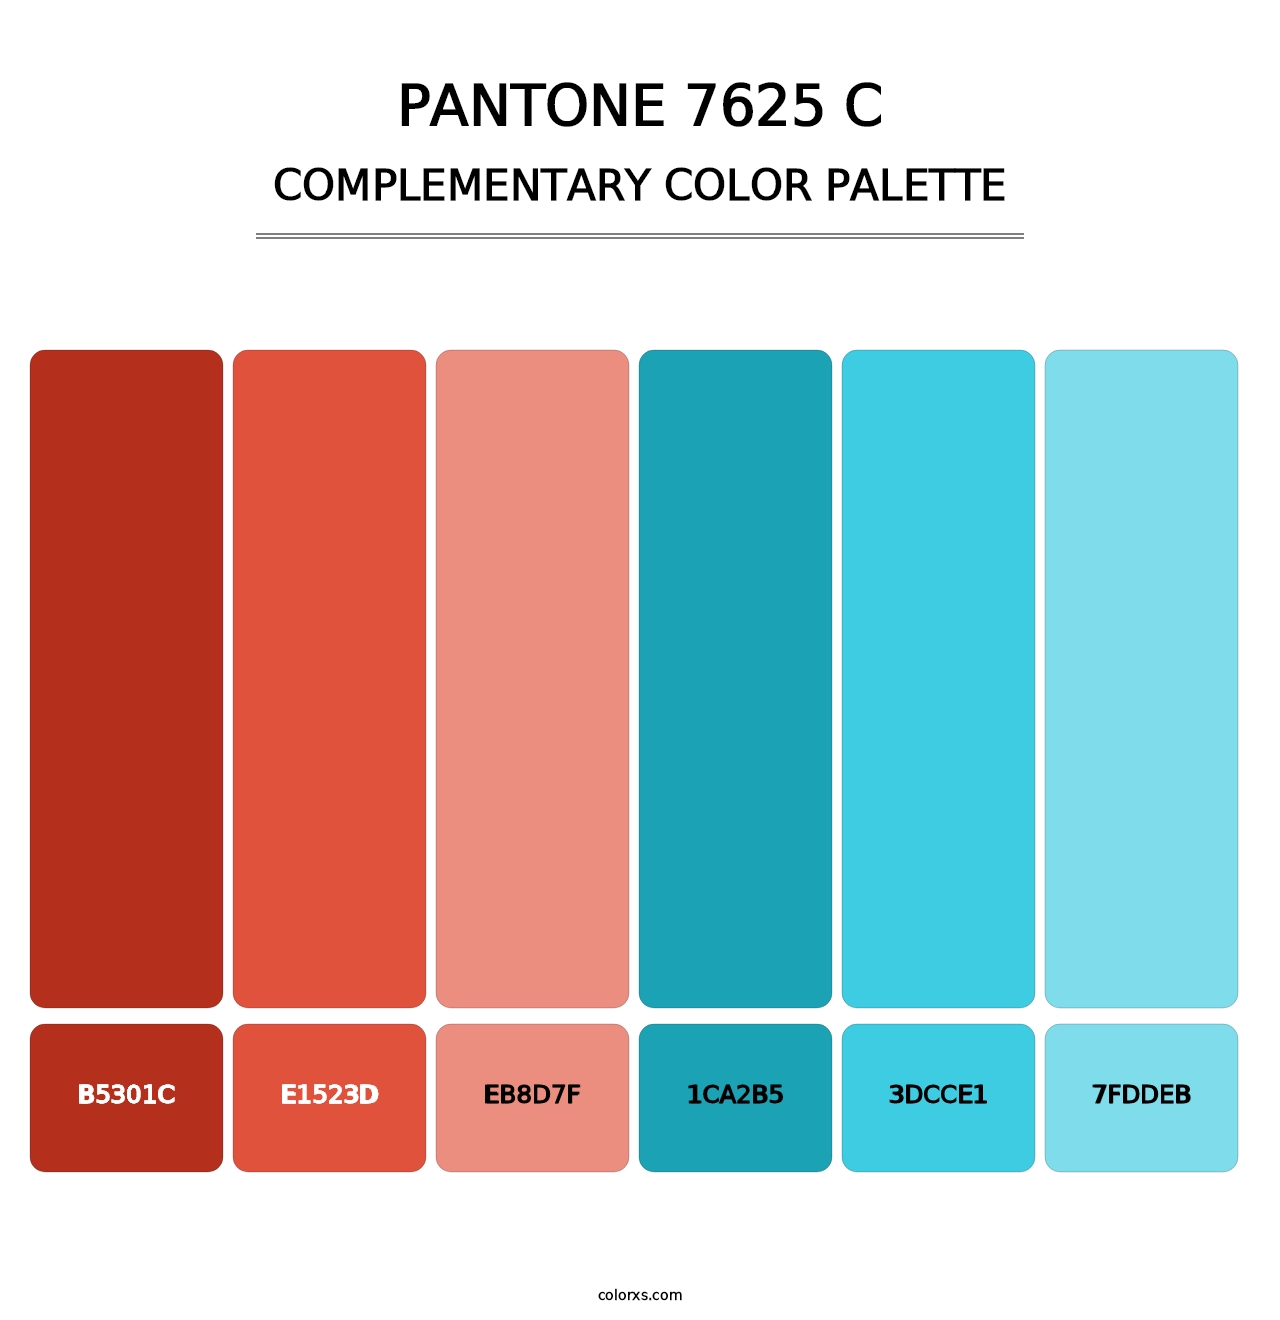 PANTONE 7625 C - Complementary Color Palette